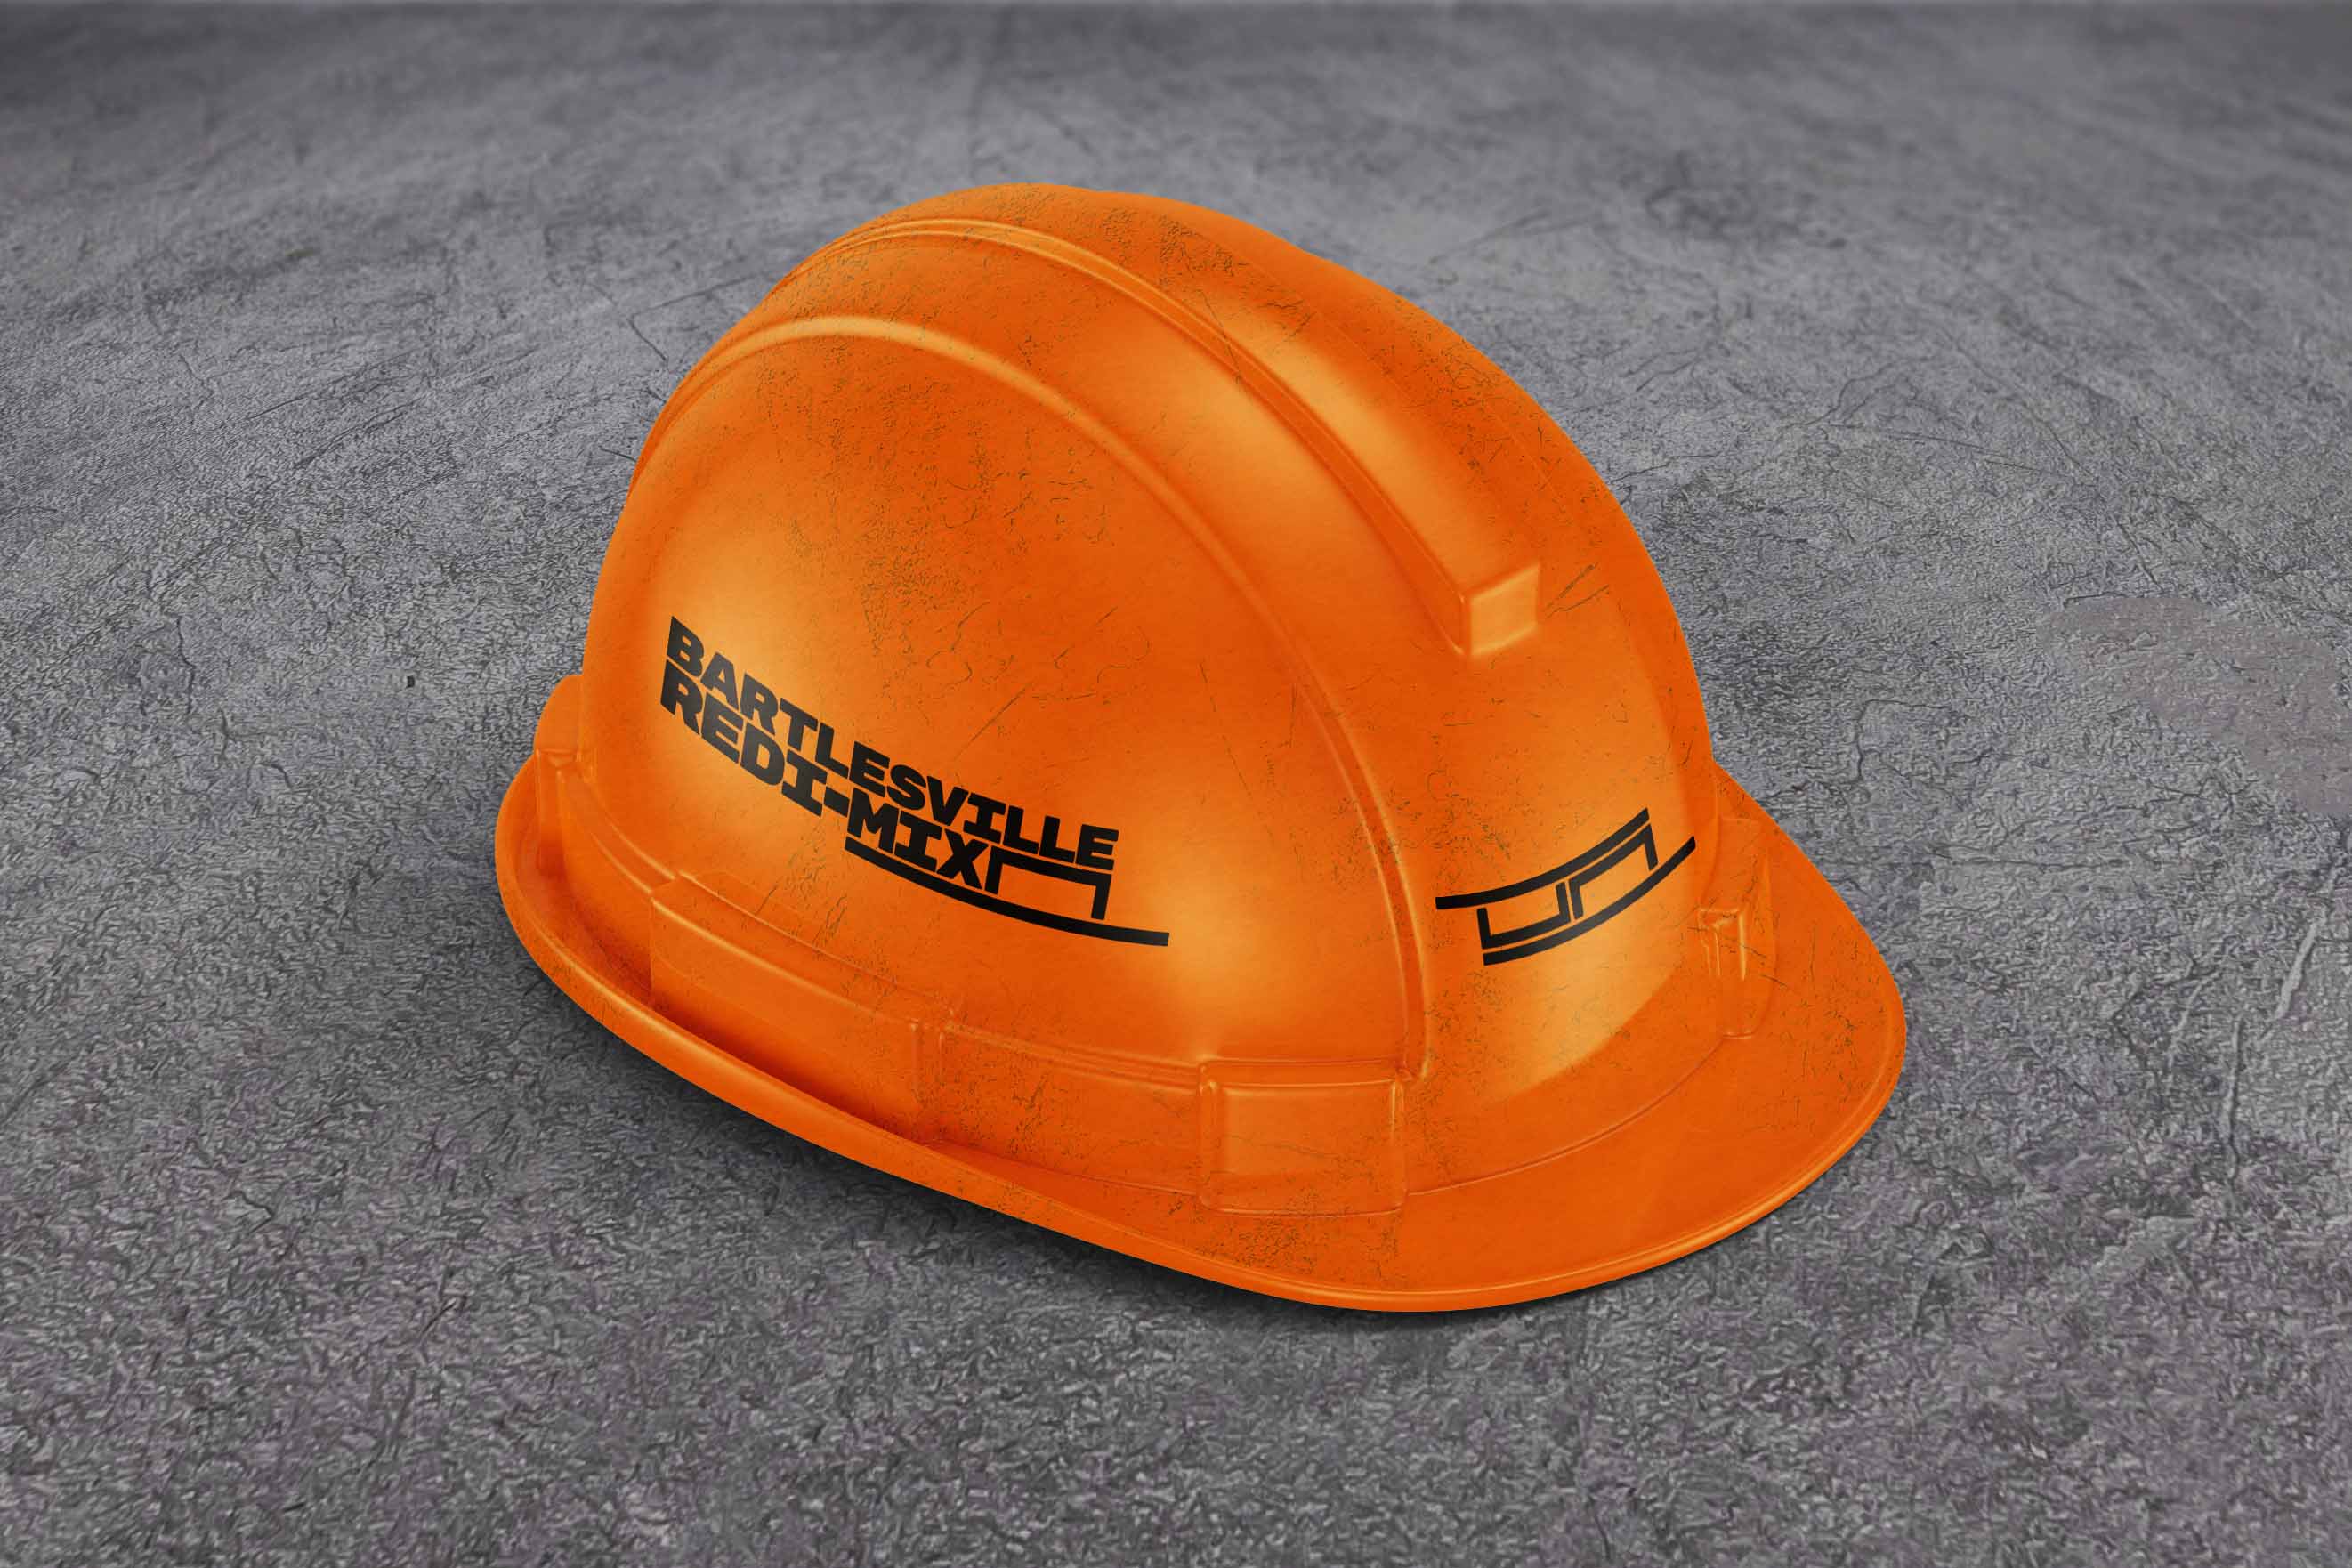 An orange hard hat featuring the Bartlesville Redi-Mix logo concept